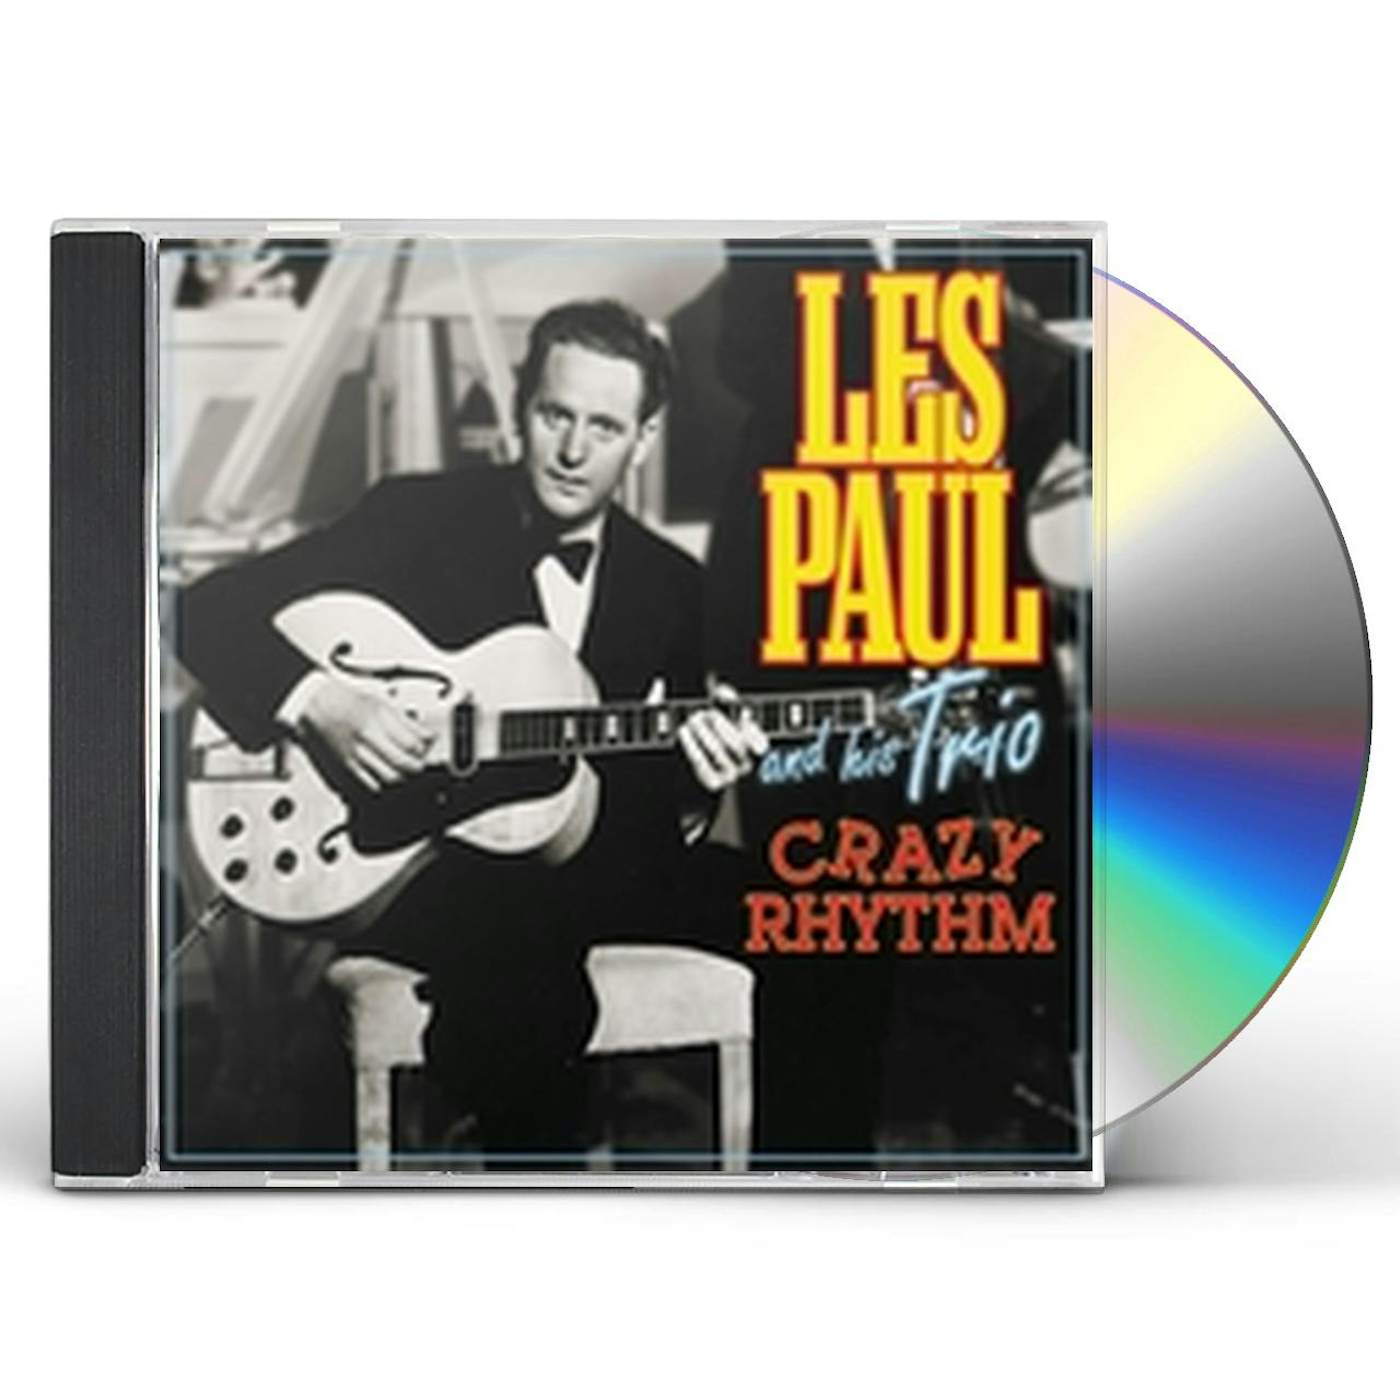 Les Paul CRAZY RHYTHM CD